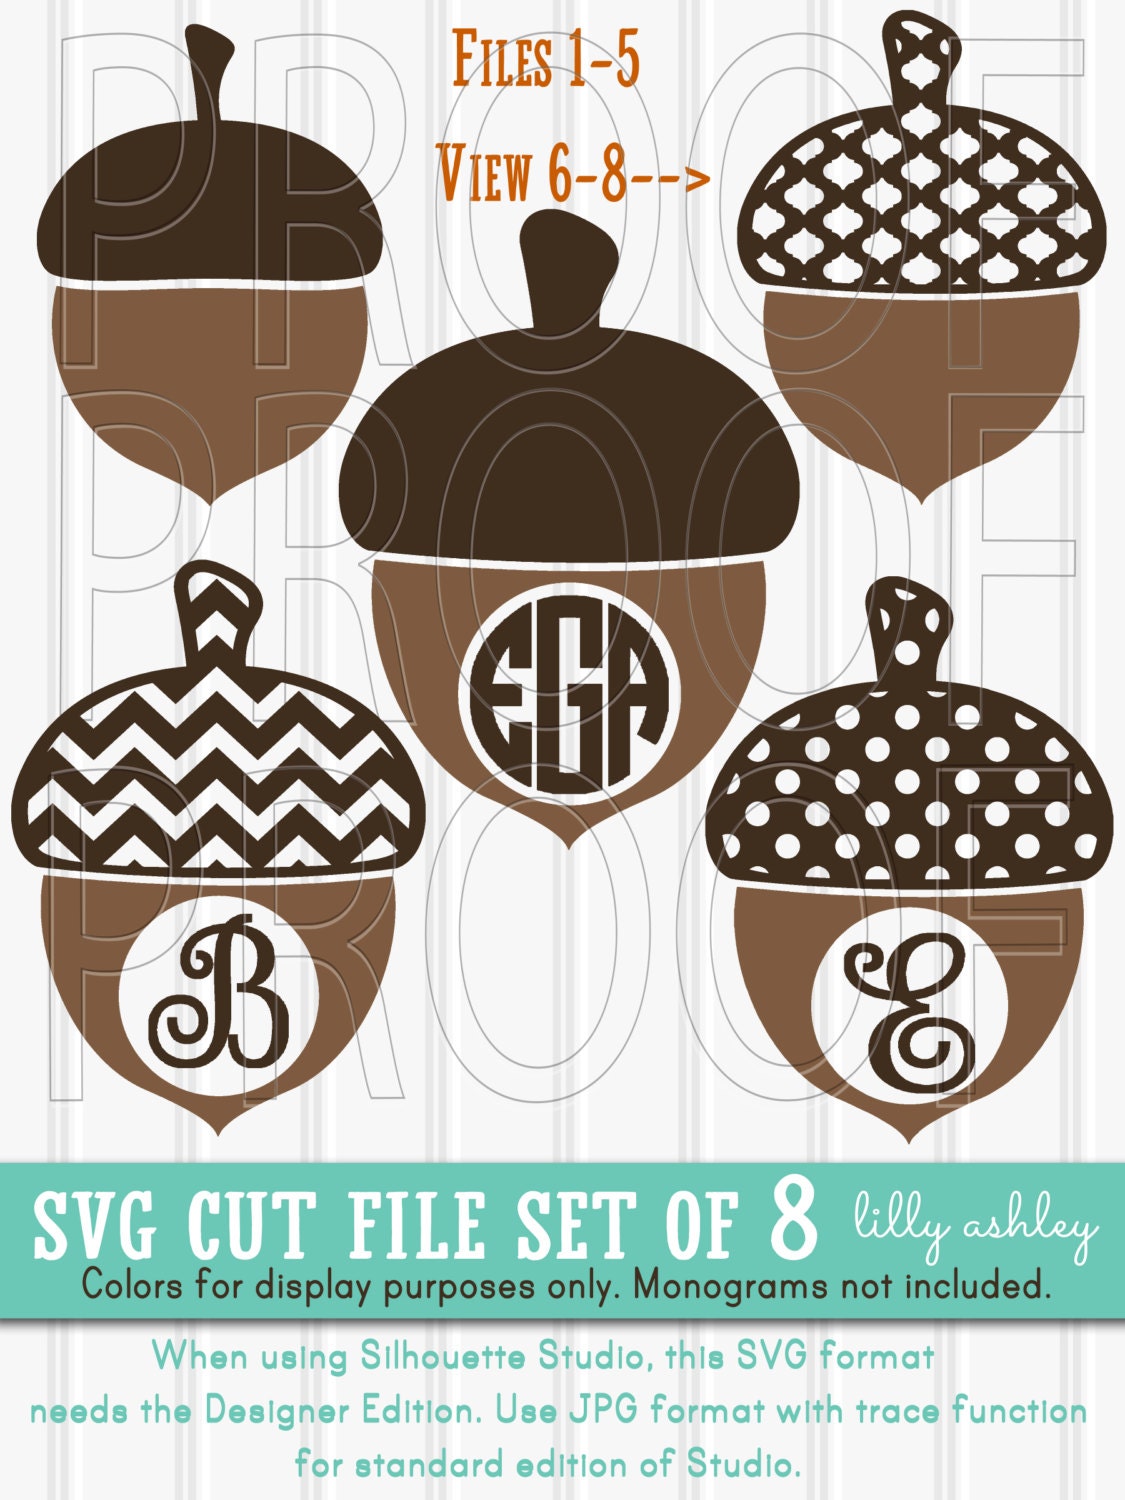 Download Monogram SVG File Set of 8 cutting files includes svg/png/jpg